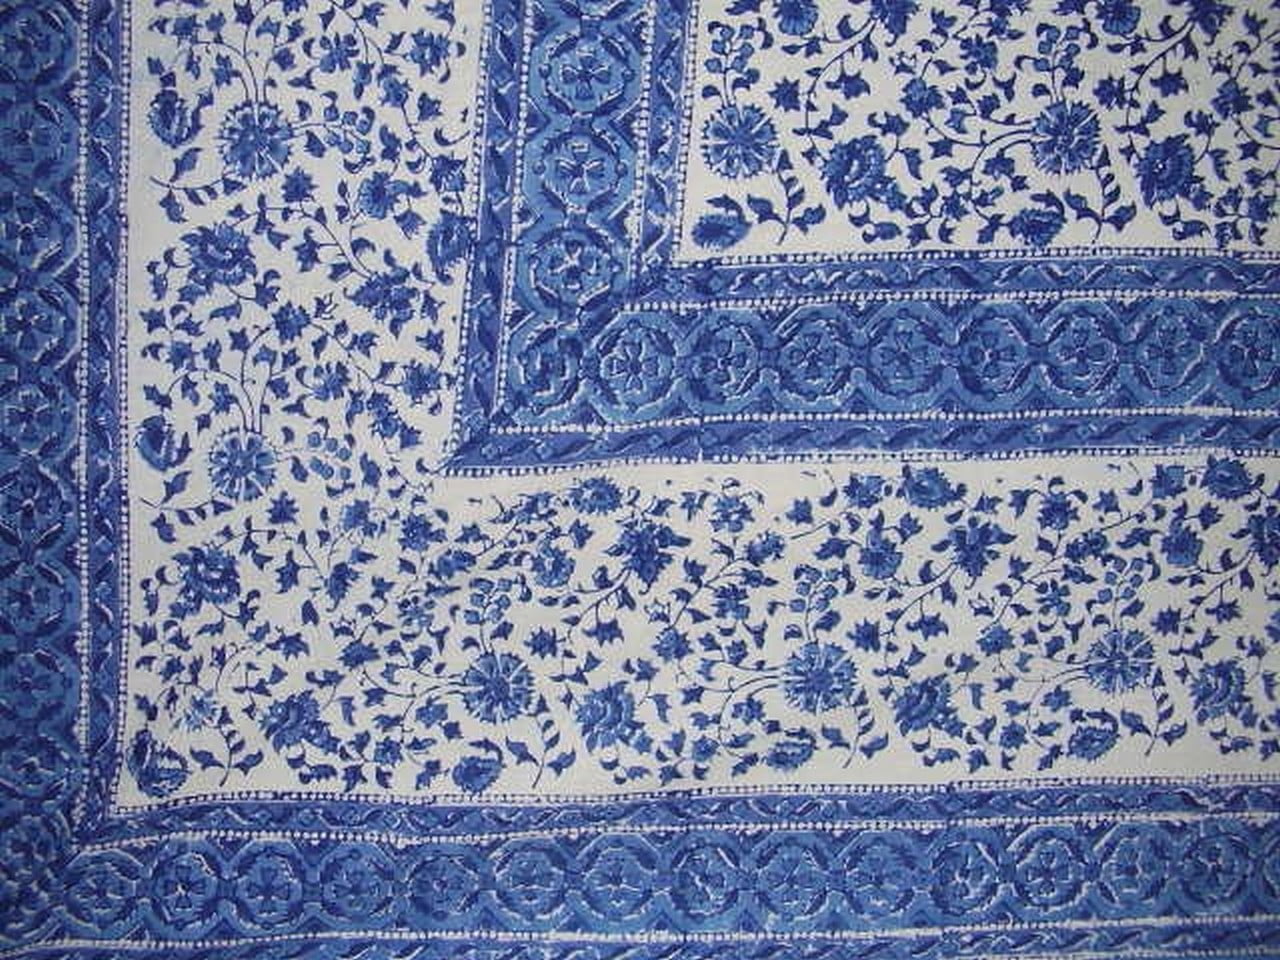 Rajasthan Block Print Tapestry Cotton Bedspread 108